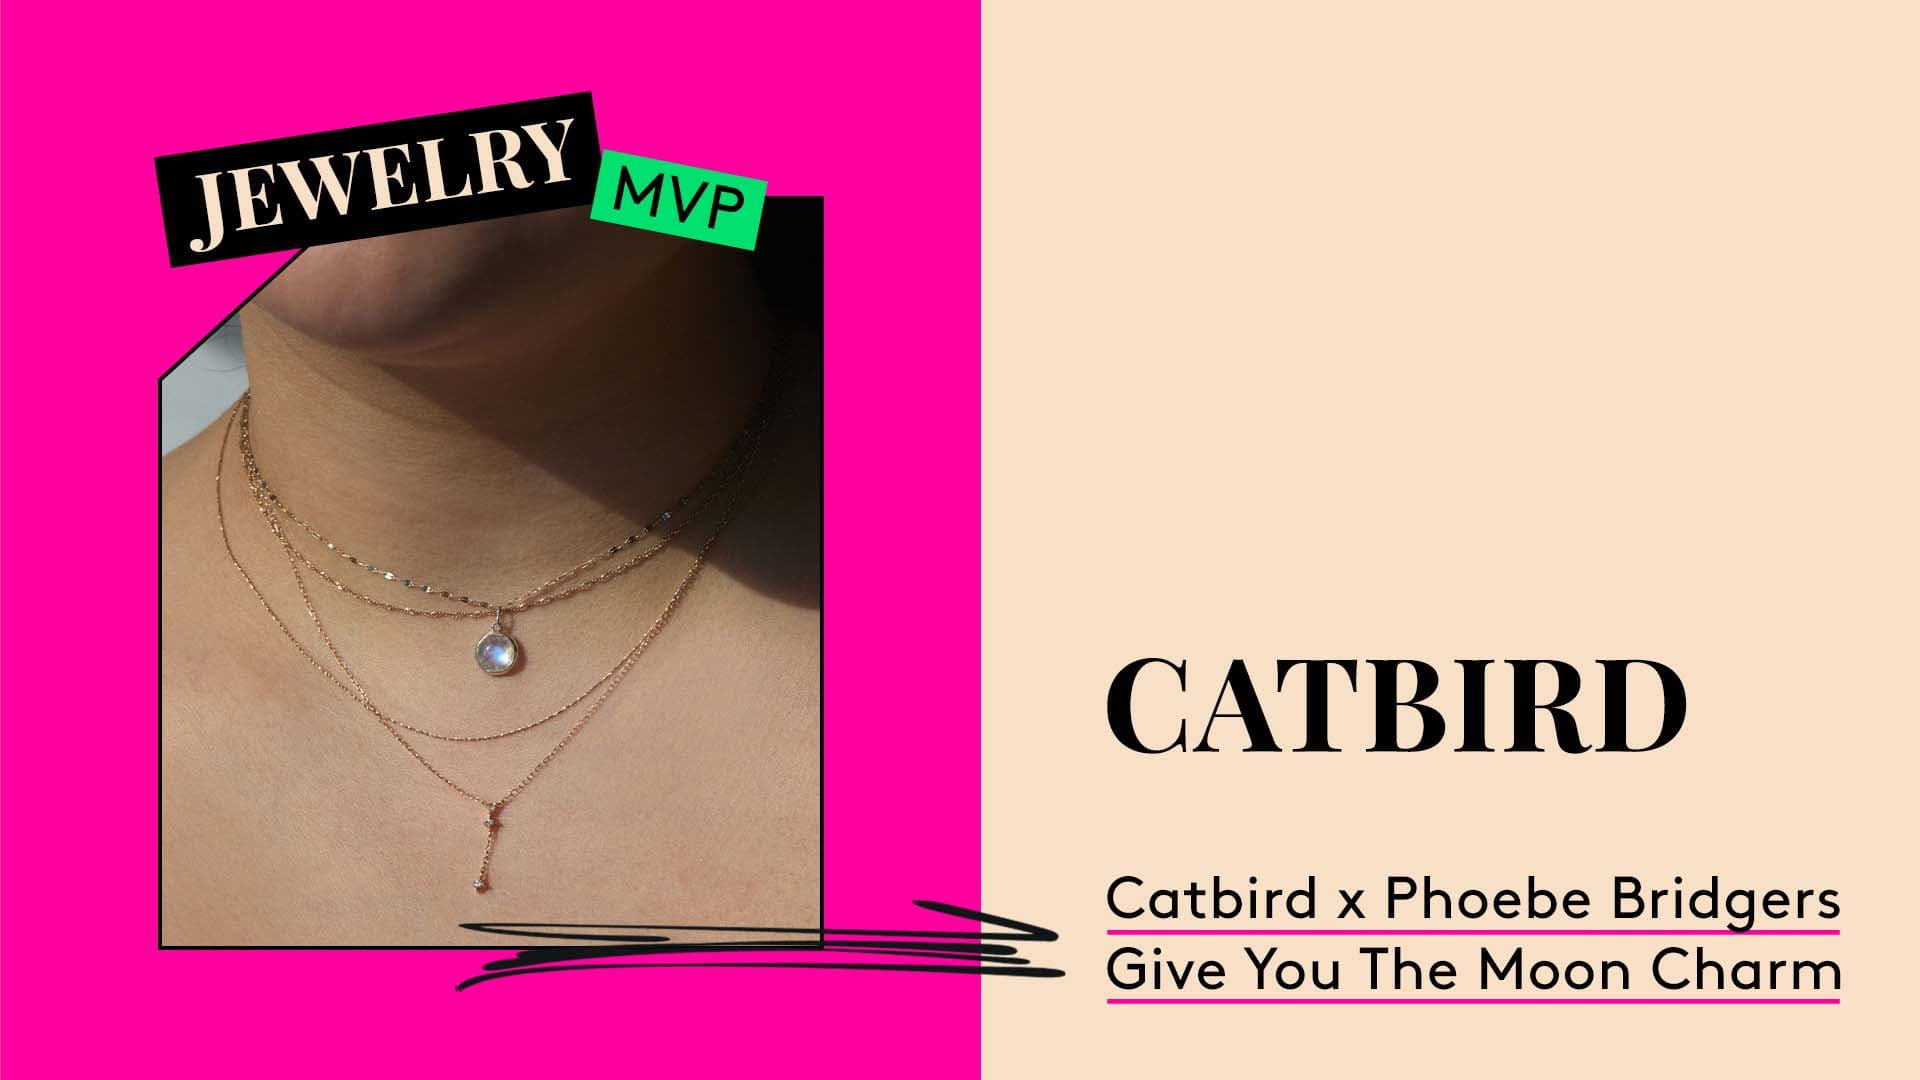 Jewelry MVP. Catbird x Phoebe Bridgers Give You The Moon Charm.